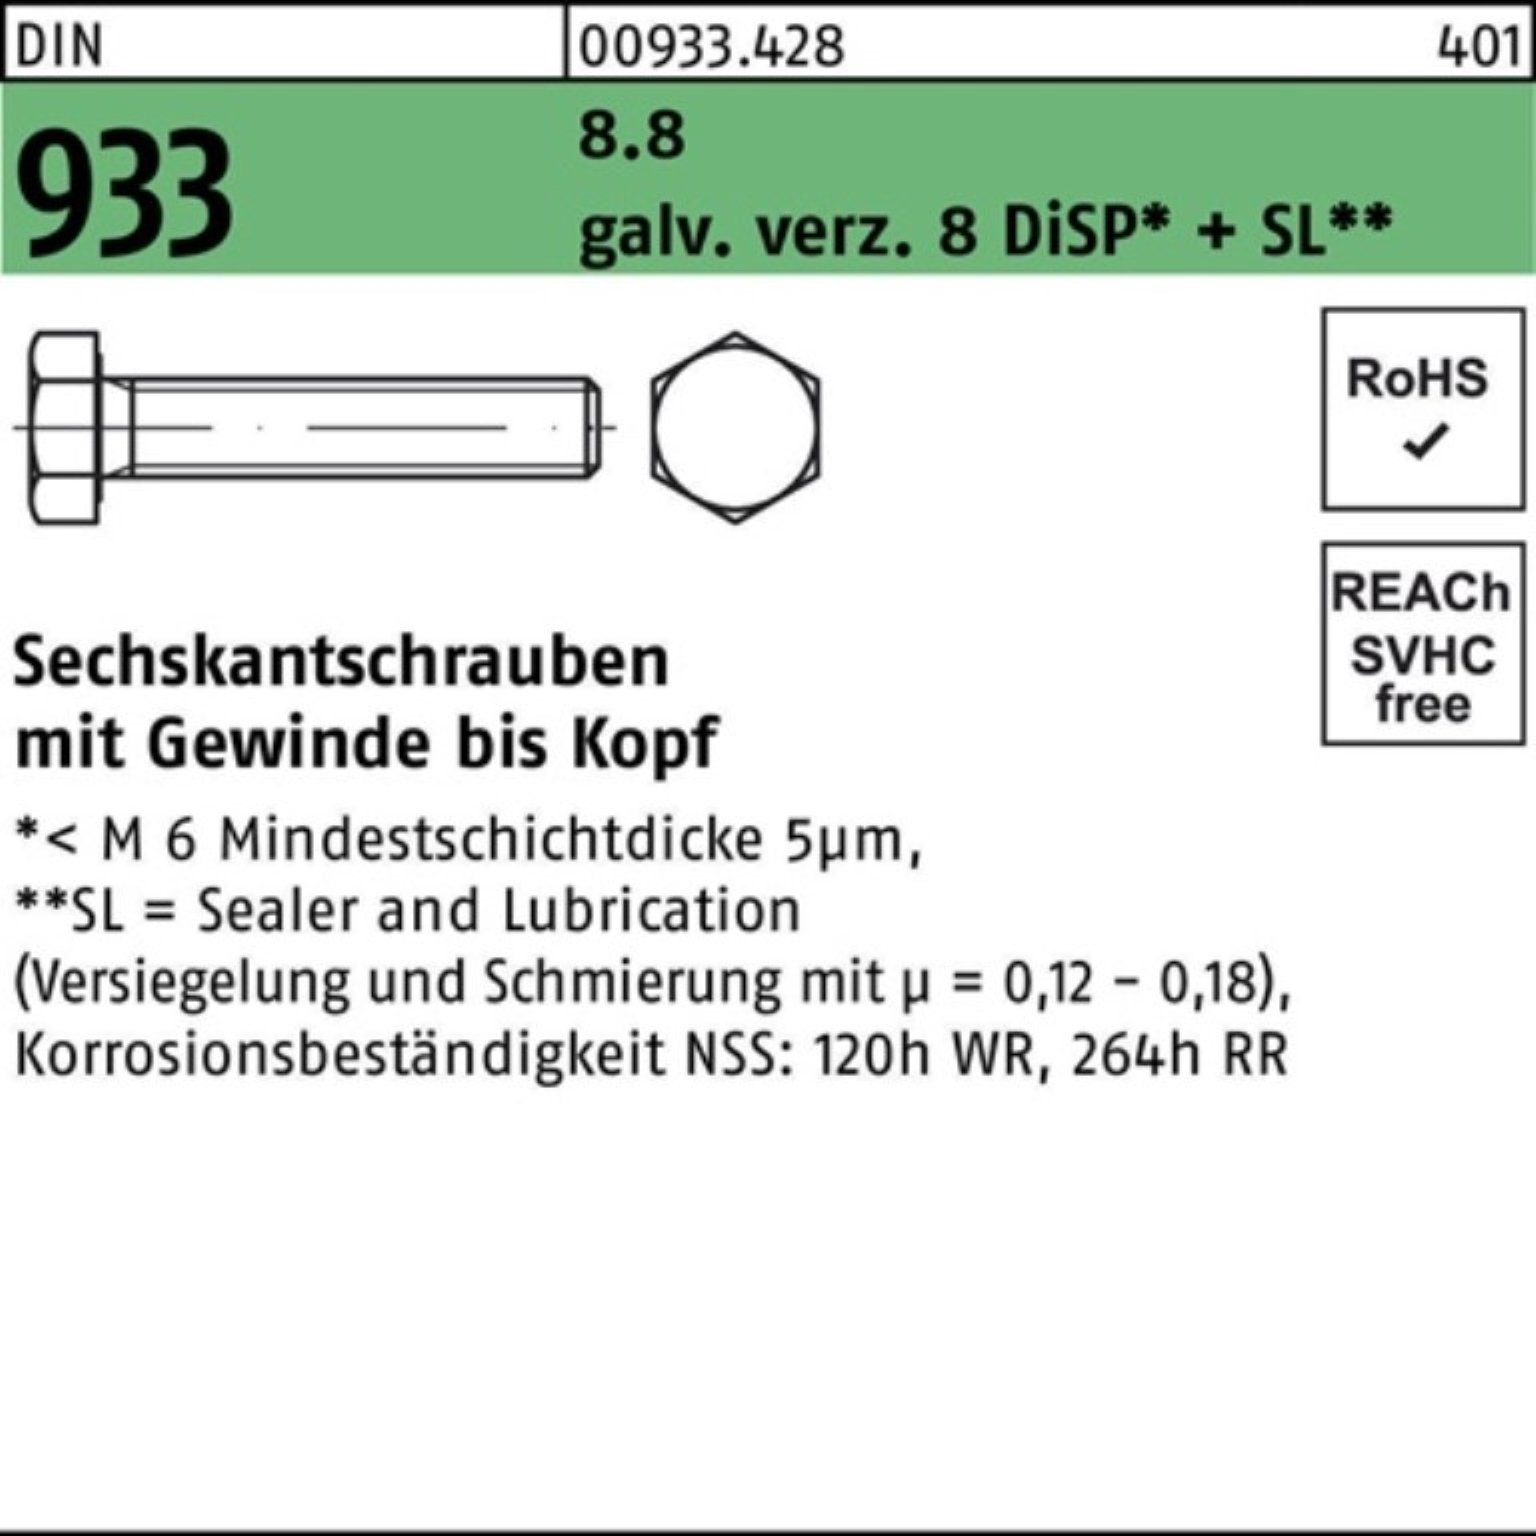 Reyher Sechskantschraube 500er Pack Sechskantschraube 8.8 SL + 500 6 DIN gal 933 DiSP Zn VG M4x